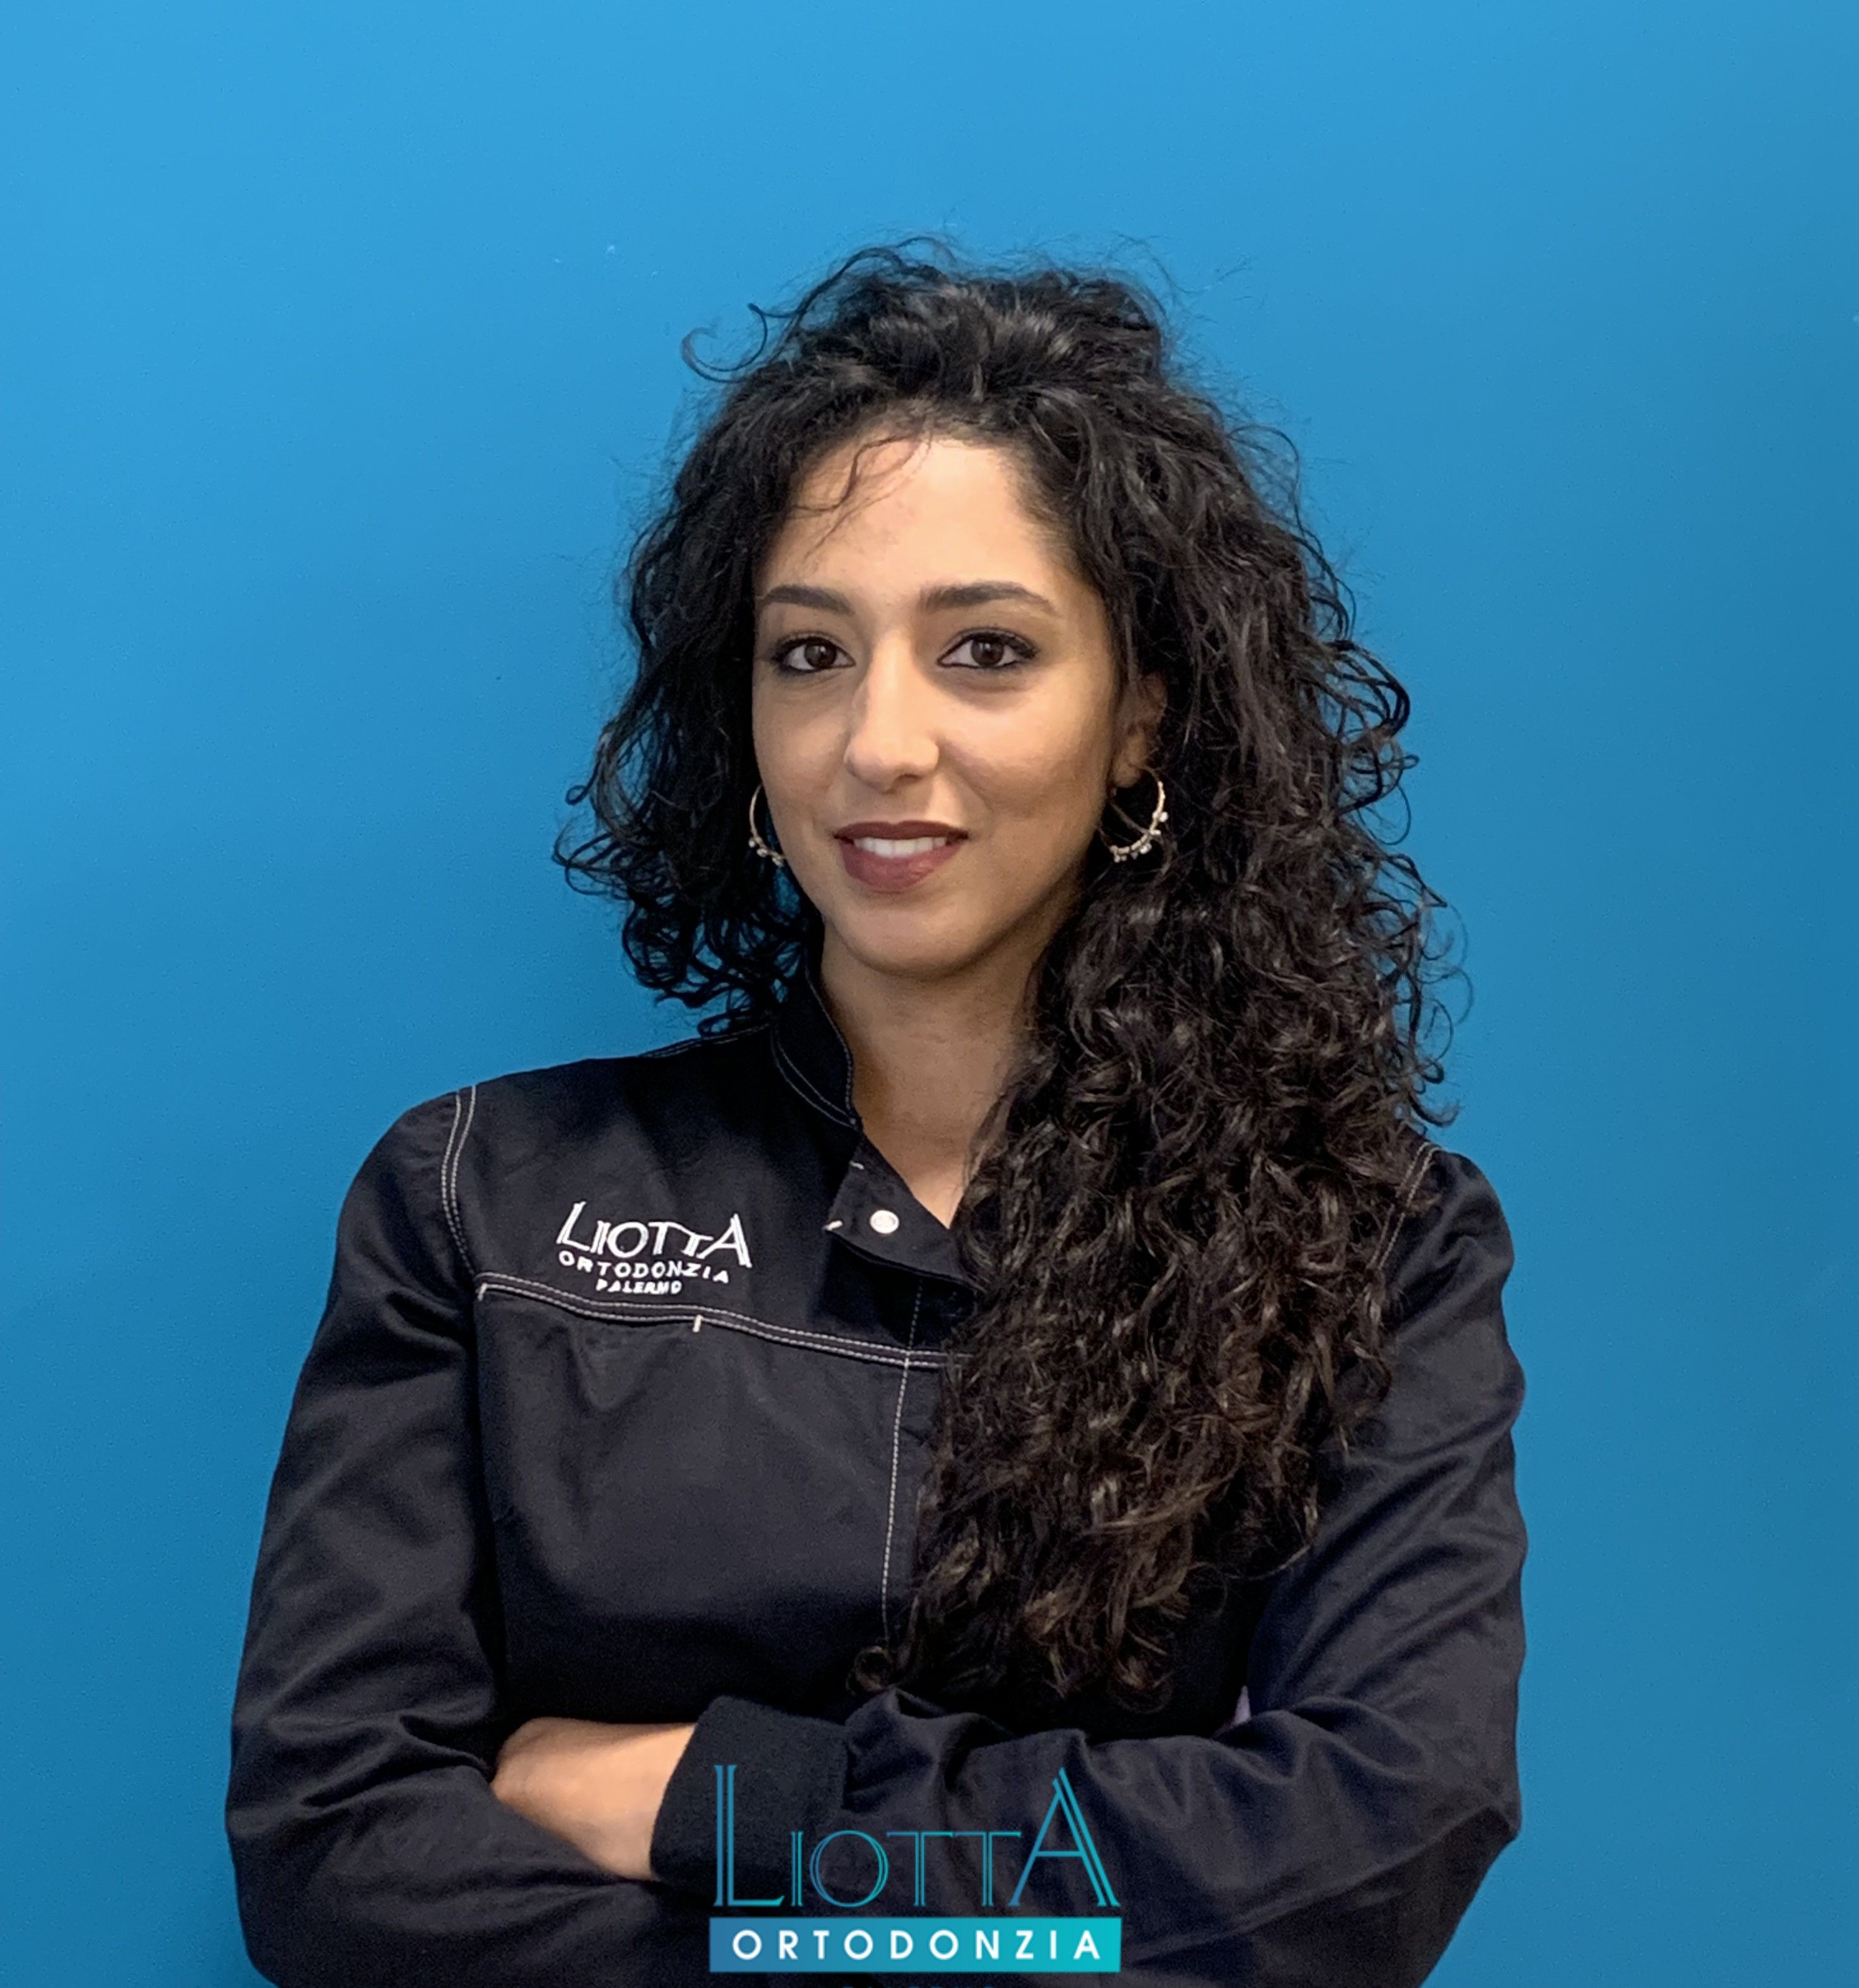 Sara, team laboratorio ortodontico Liotta Palermo